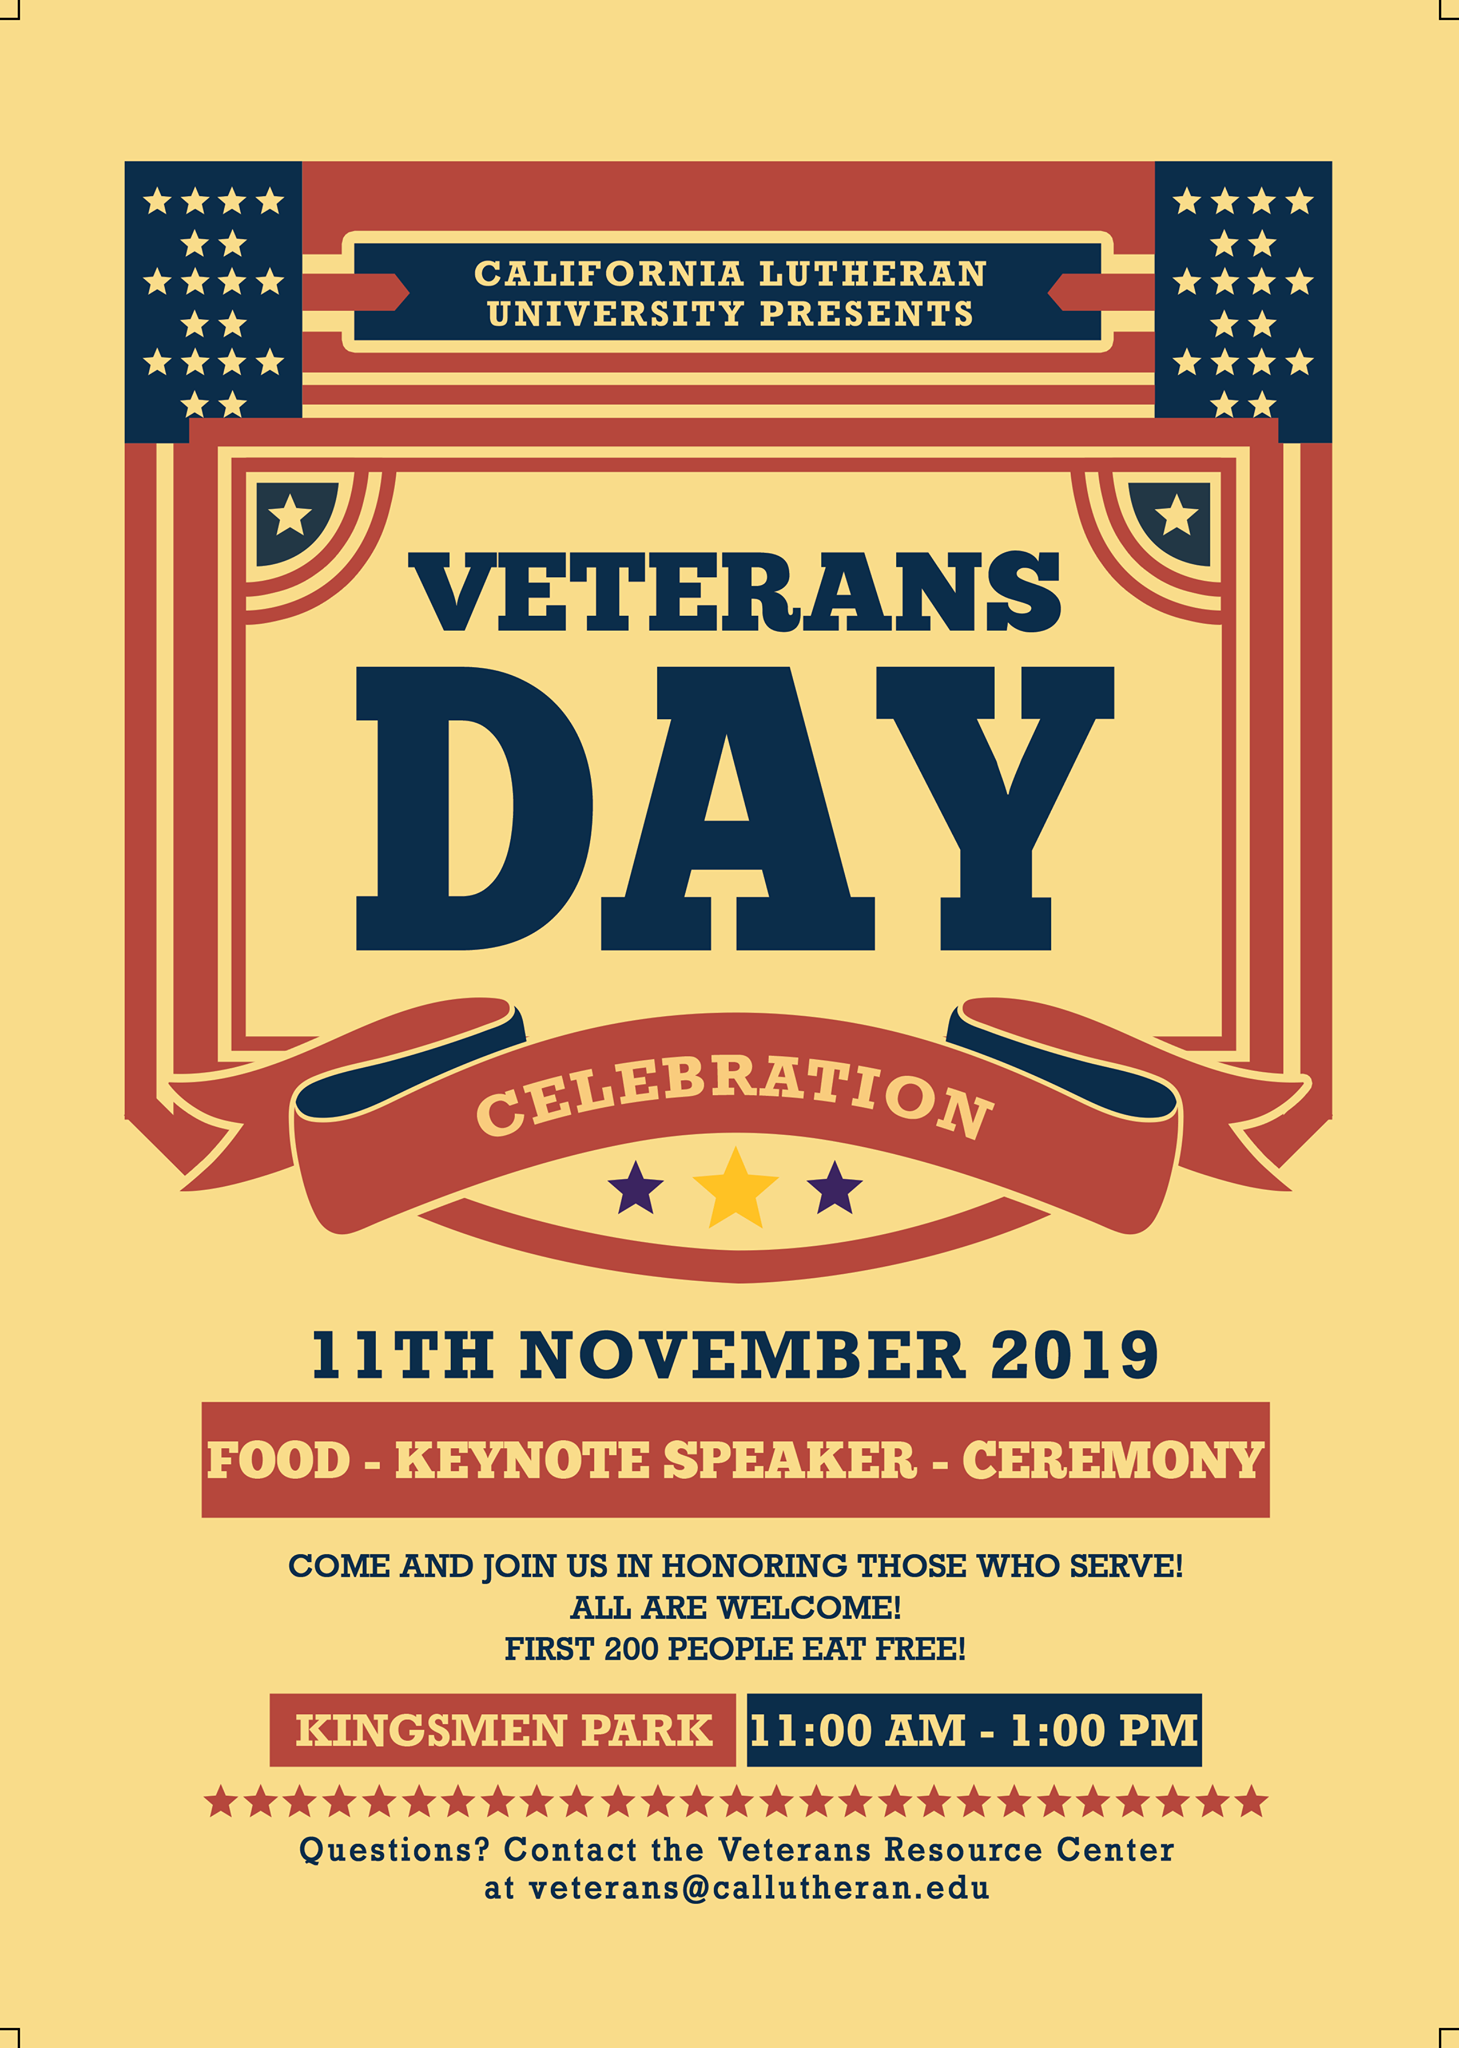 Veterans Day Event Celebration Flyer